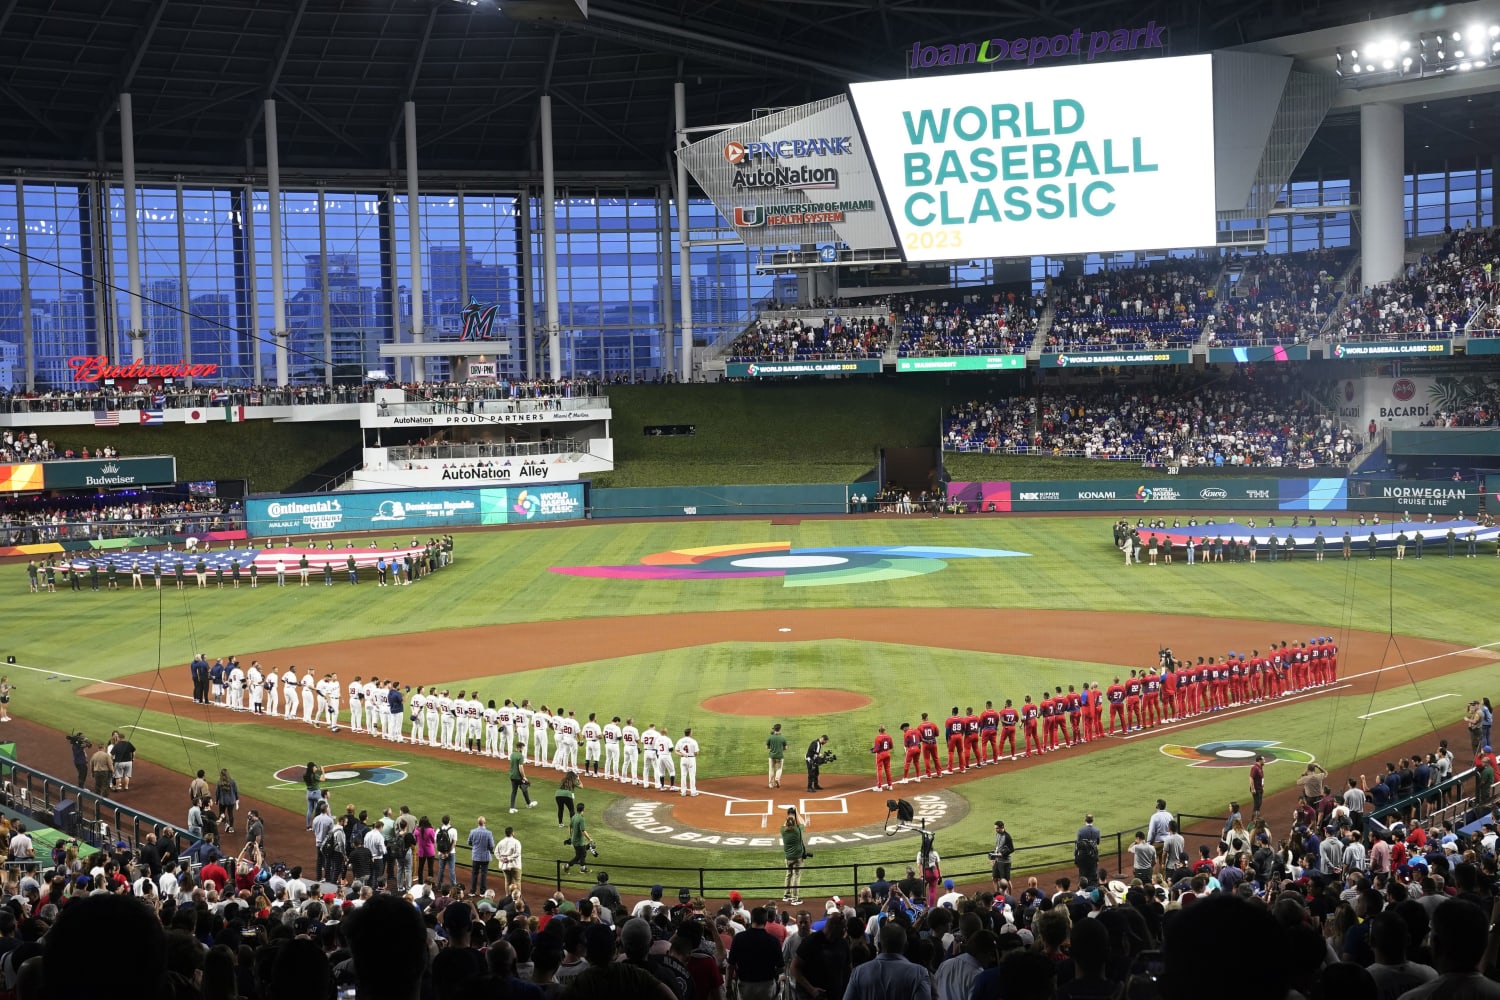 USA thrash Cuba to reach World Baseball Classic final as protesters